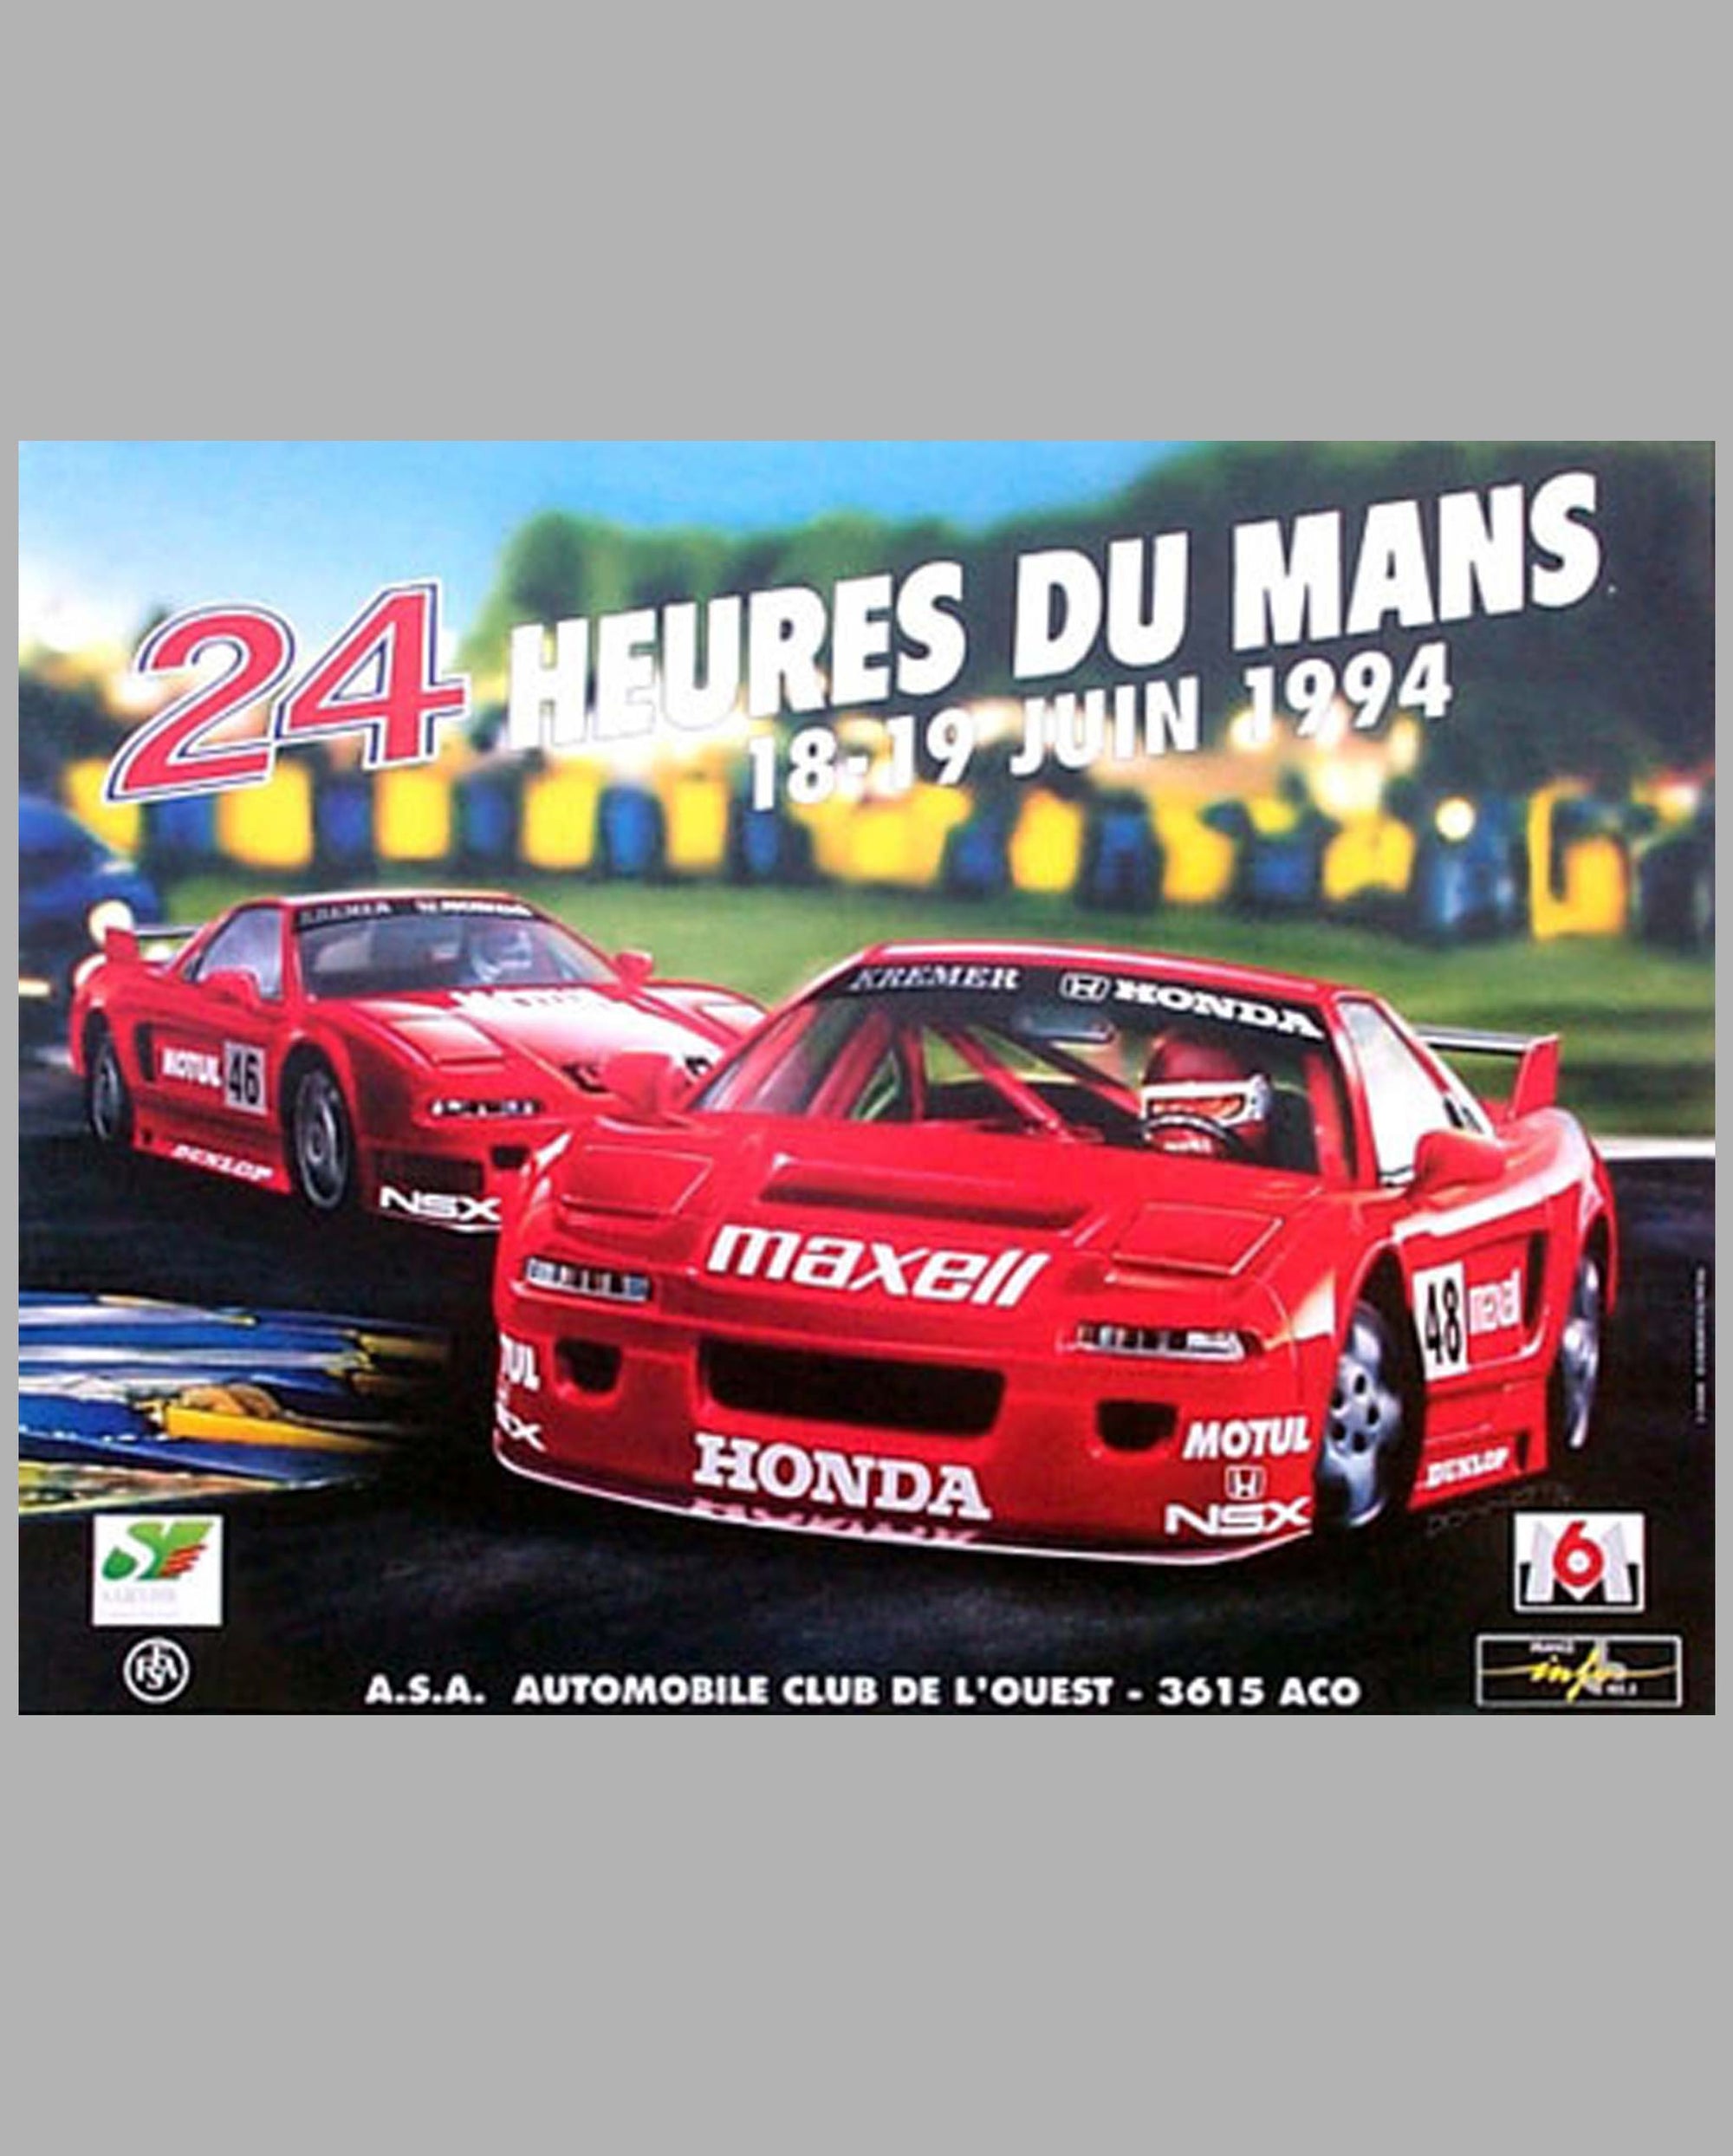 1994 24 Heures du Mans Original Poster